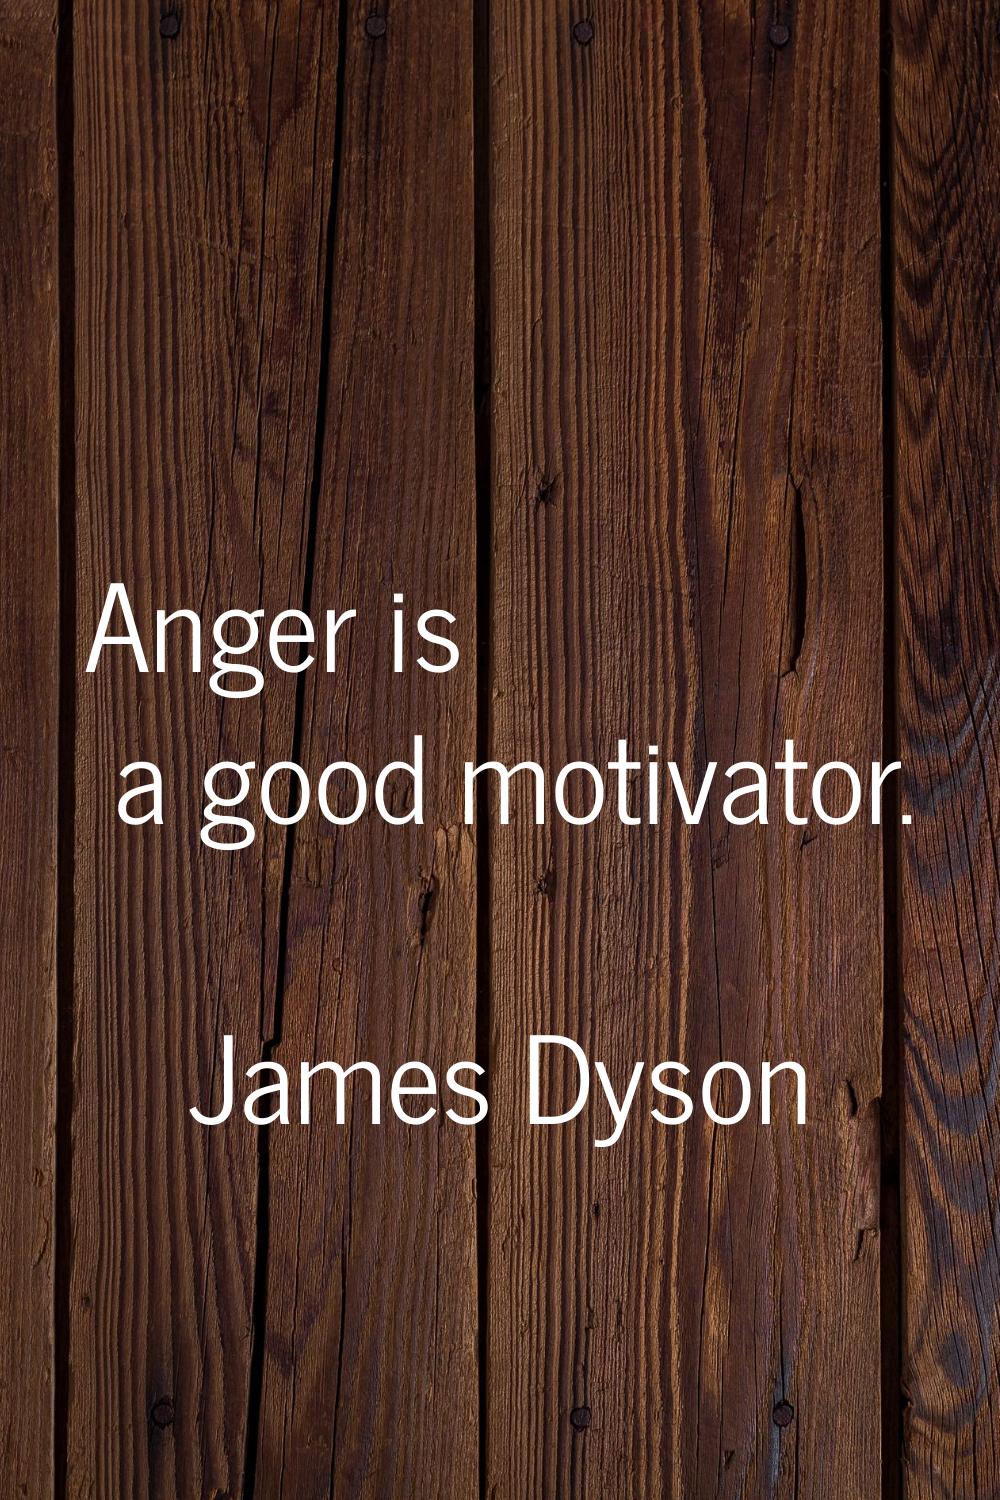 Anger is a good motivator.